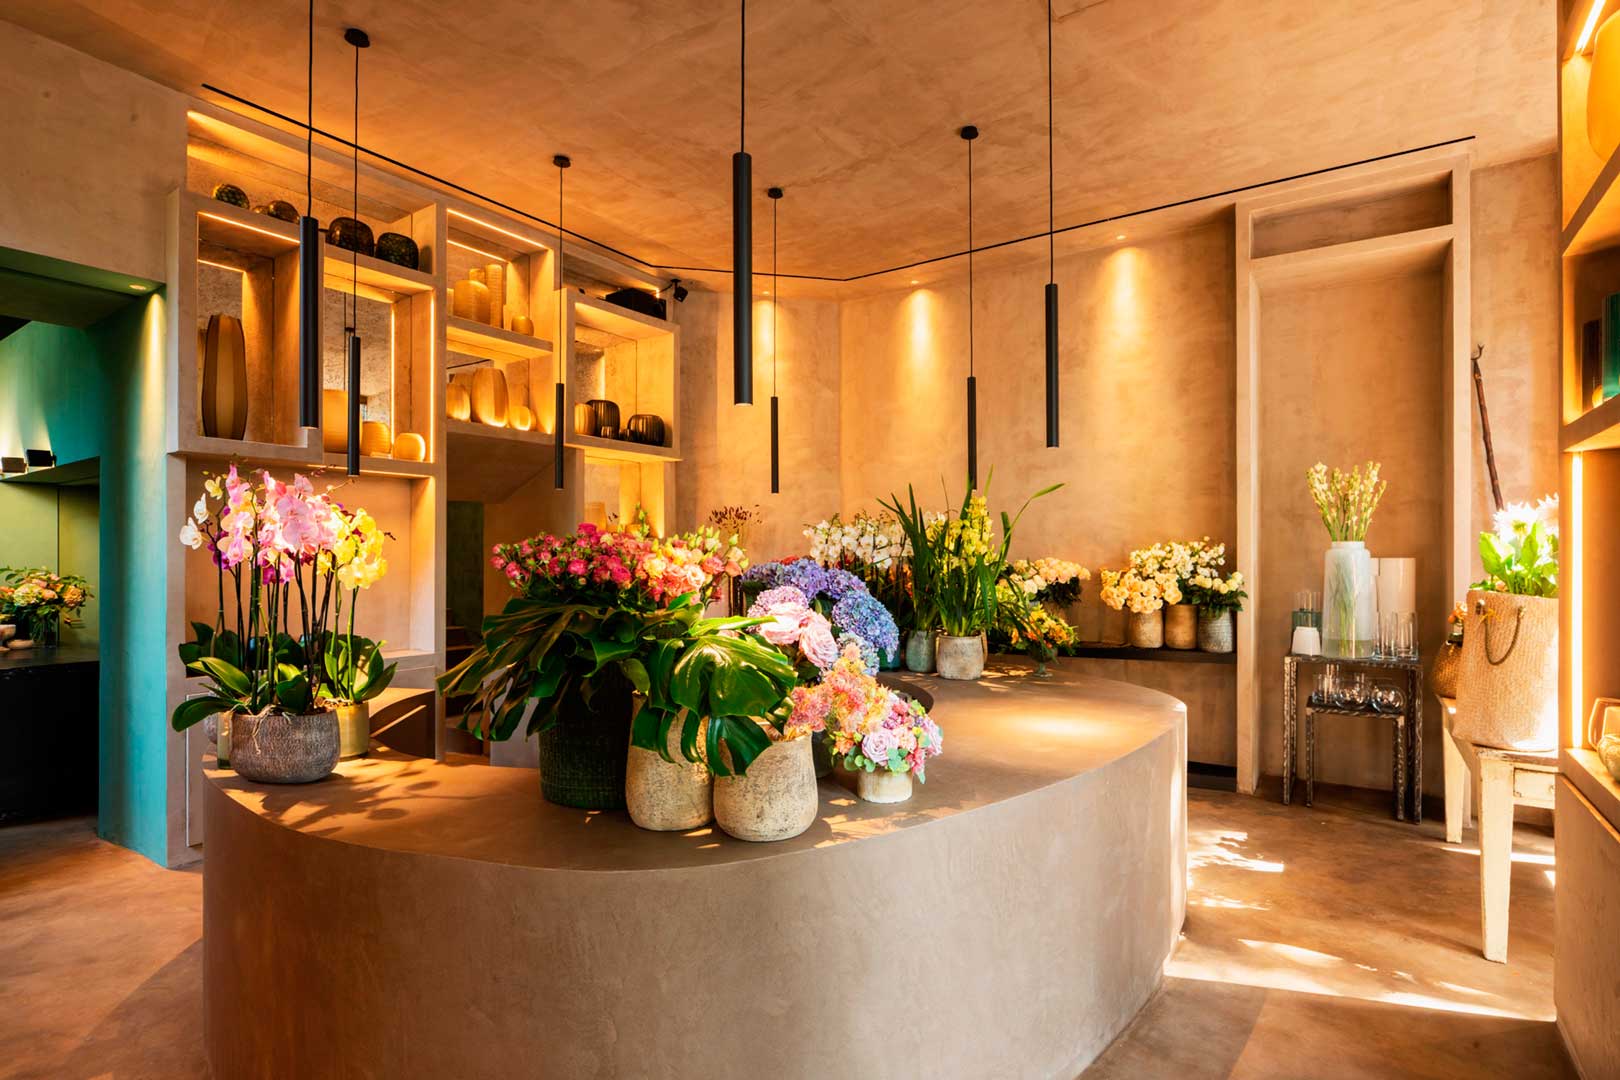 Negozio Fiori.The 10 Best Flower Shops In Milan Flawless Milano